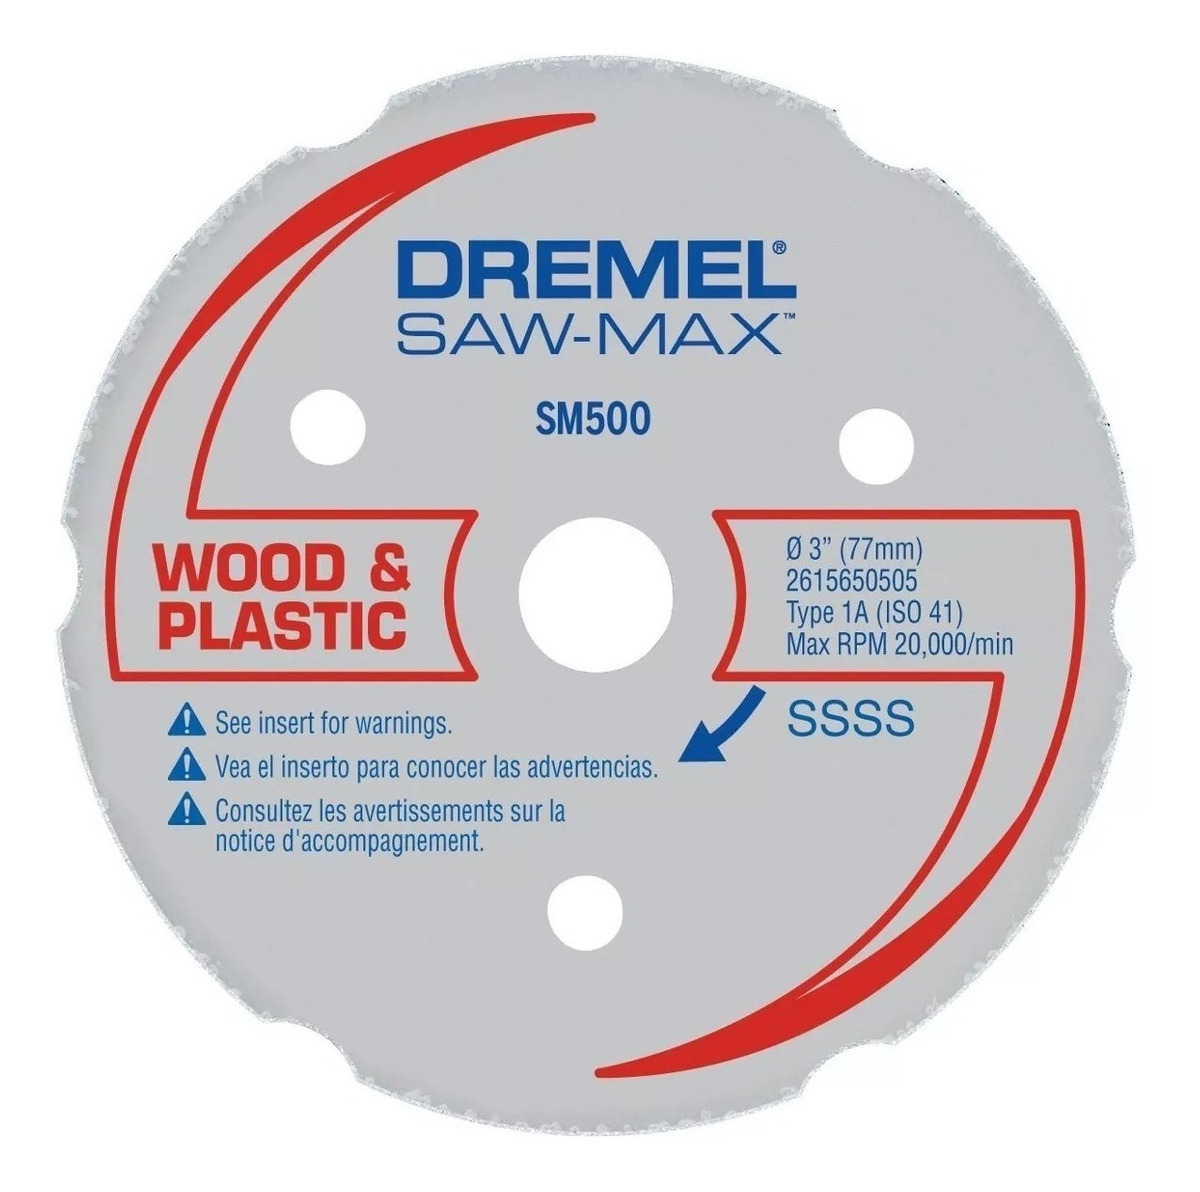 DISCO DE CORTE DREMEL SAW MAX DSM500-RW